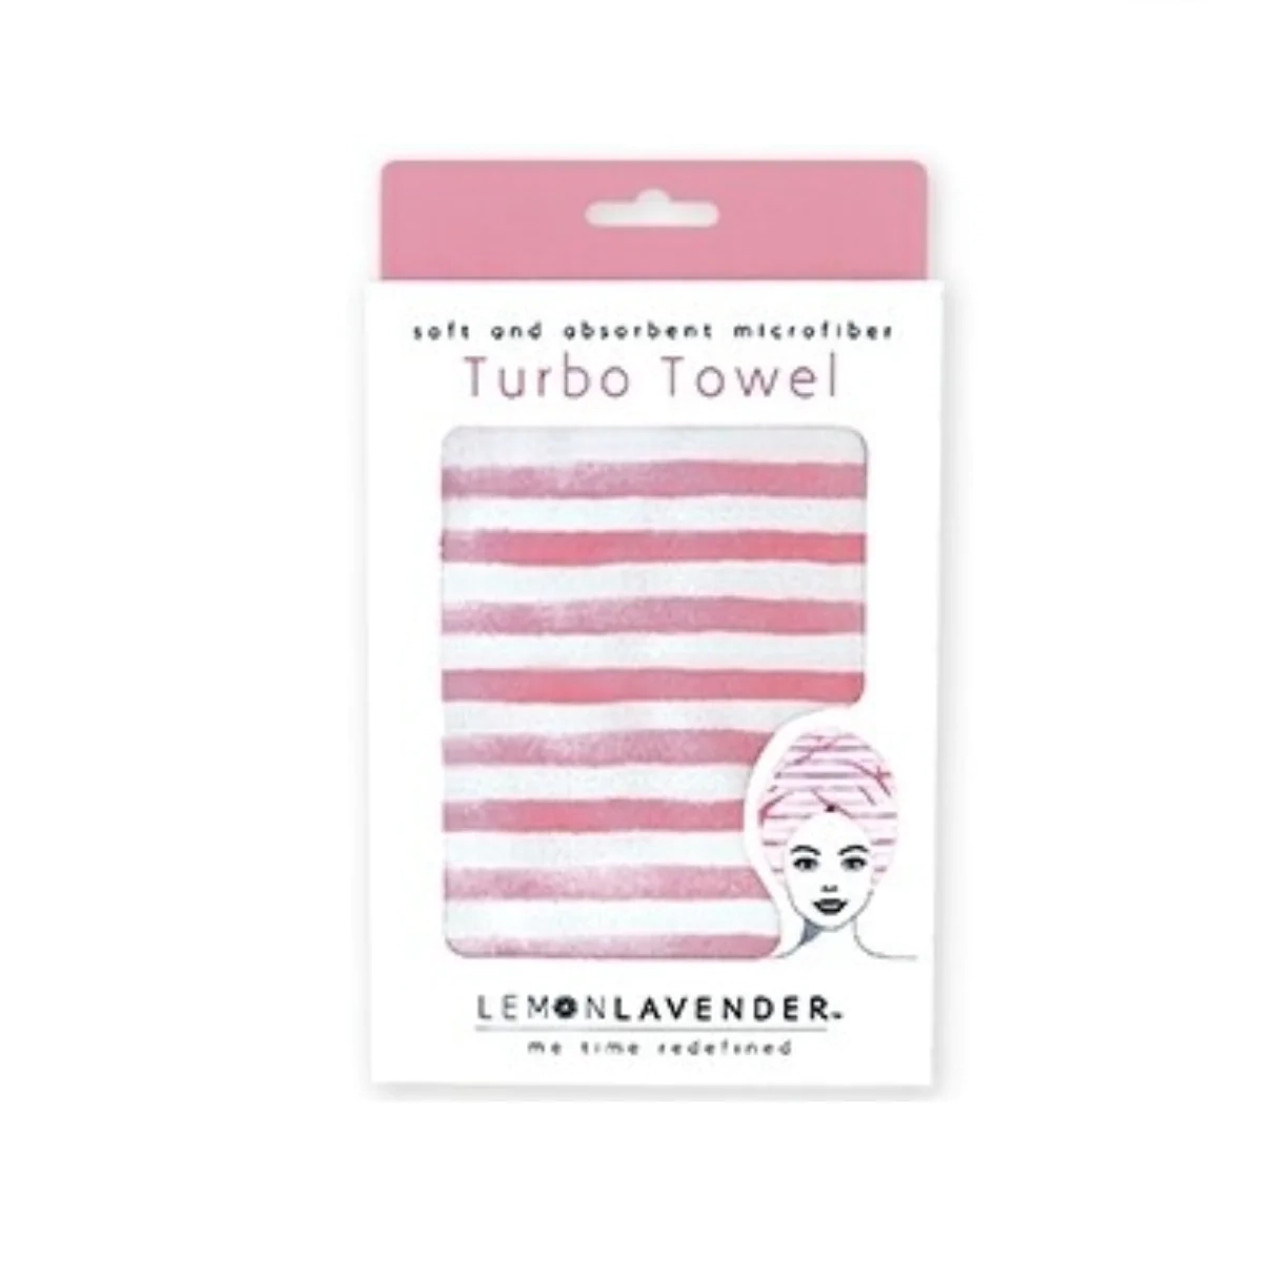 Lemon Lavender Microfiber Turbo Towel – Painterly Pink/White Stripes